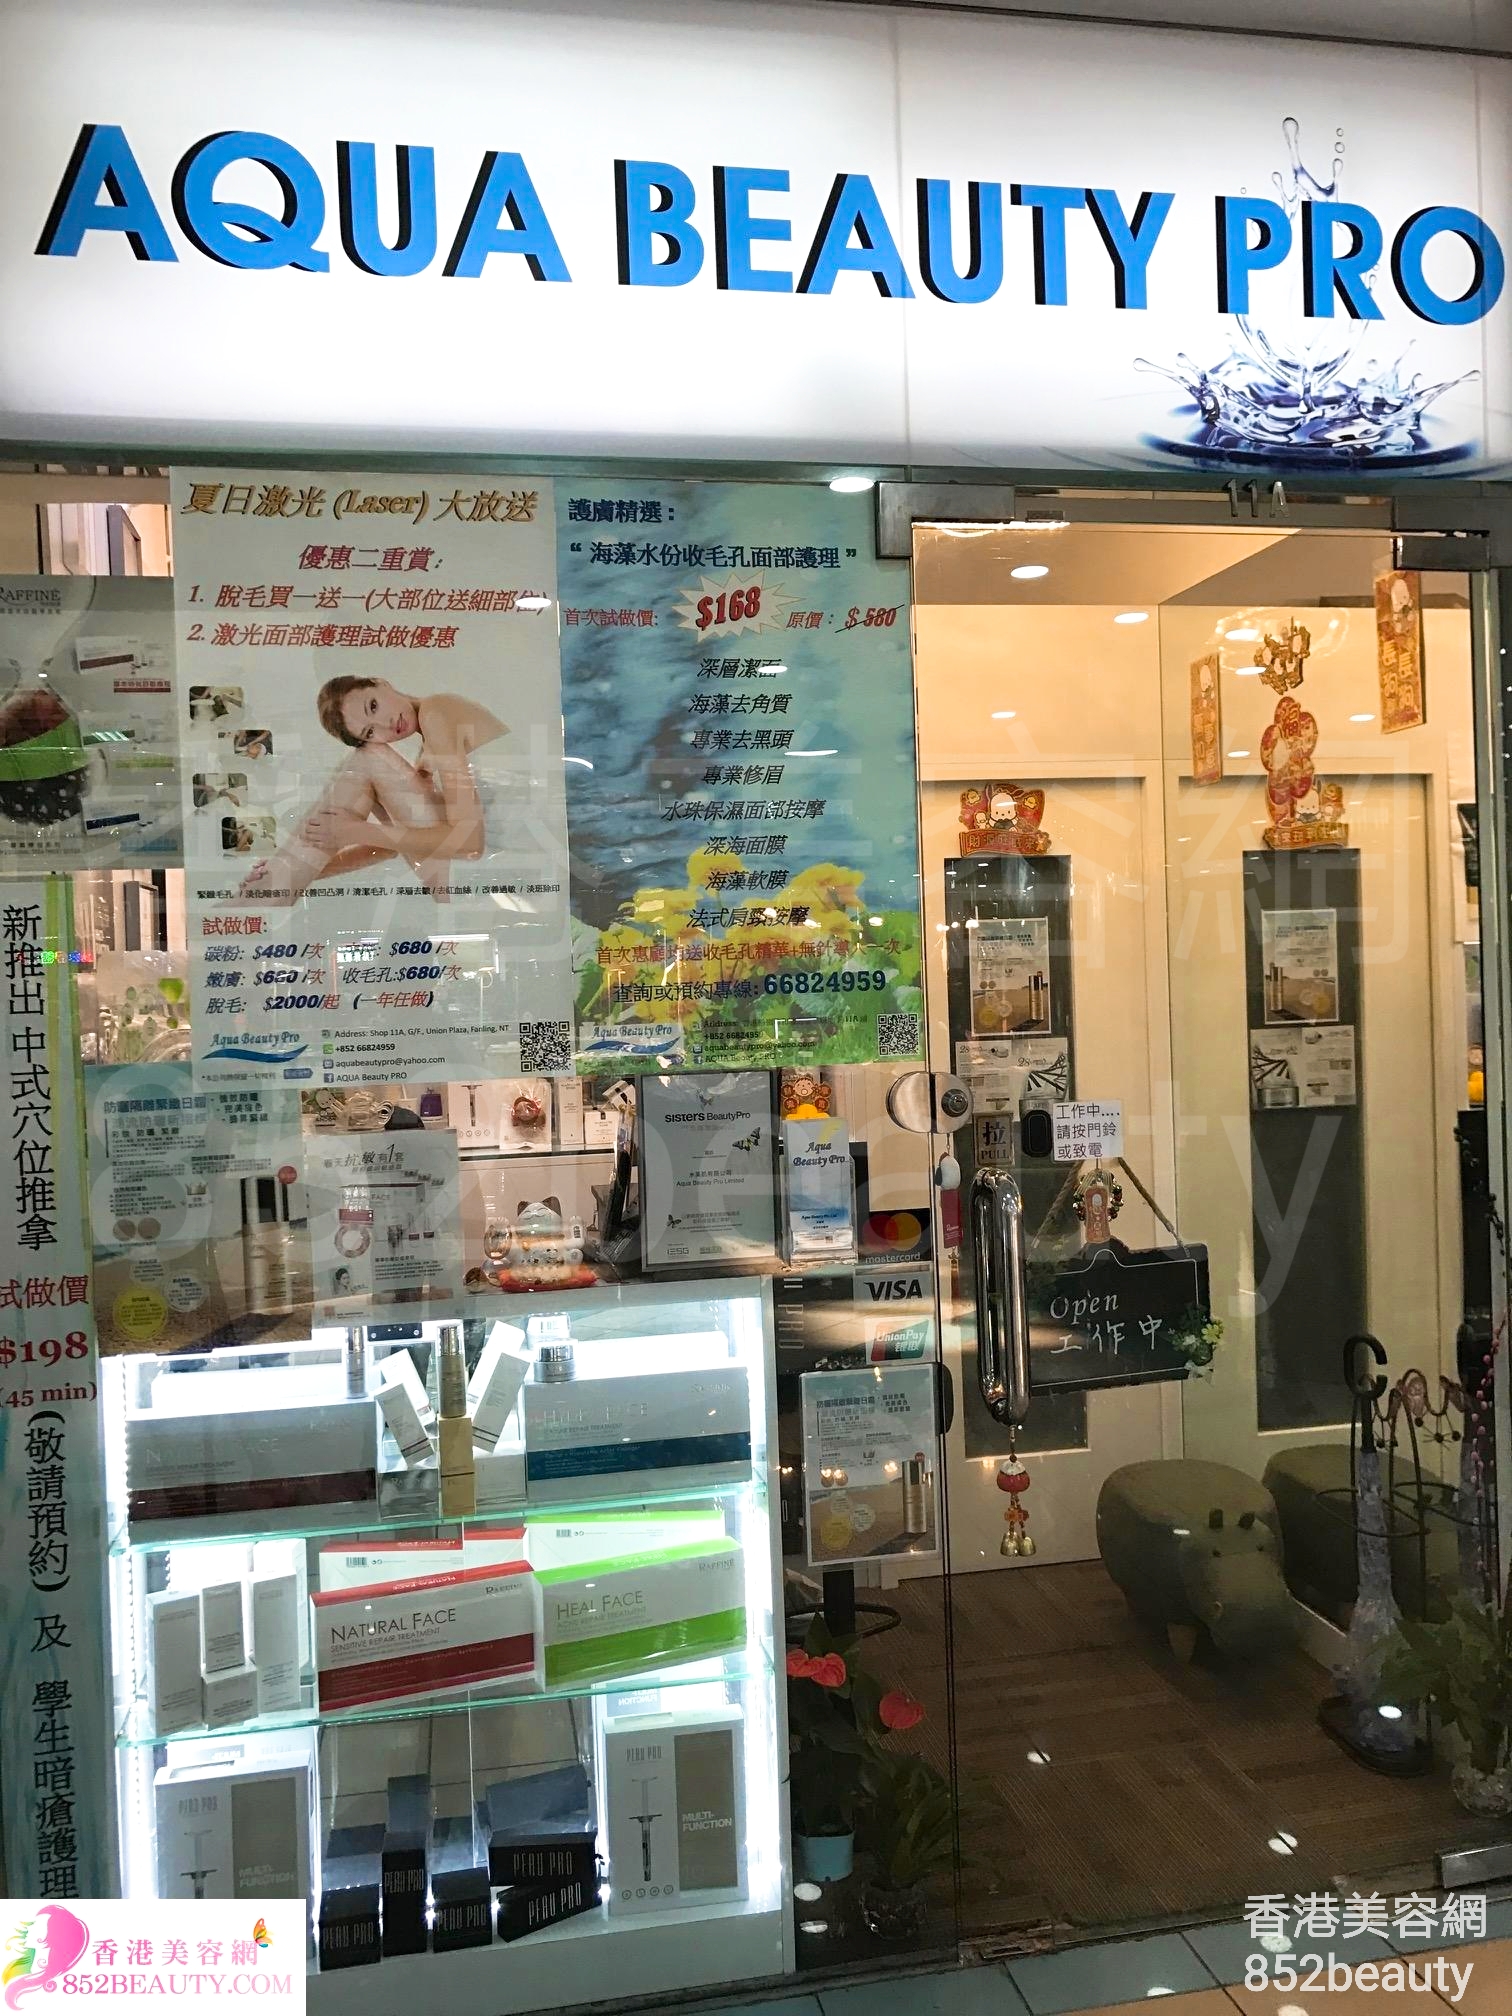 香港美容網 Hong Kong Beauty Salon 美容院 / 美容師: Aqua Beauty Pro